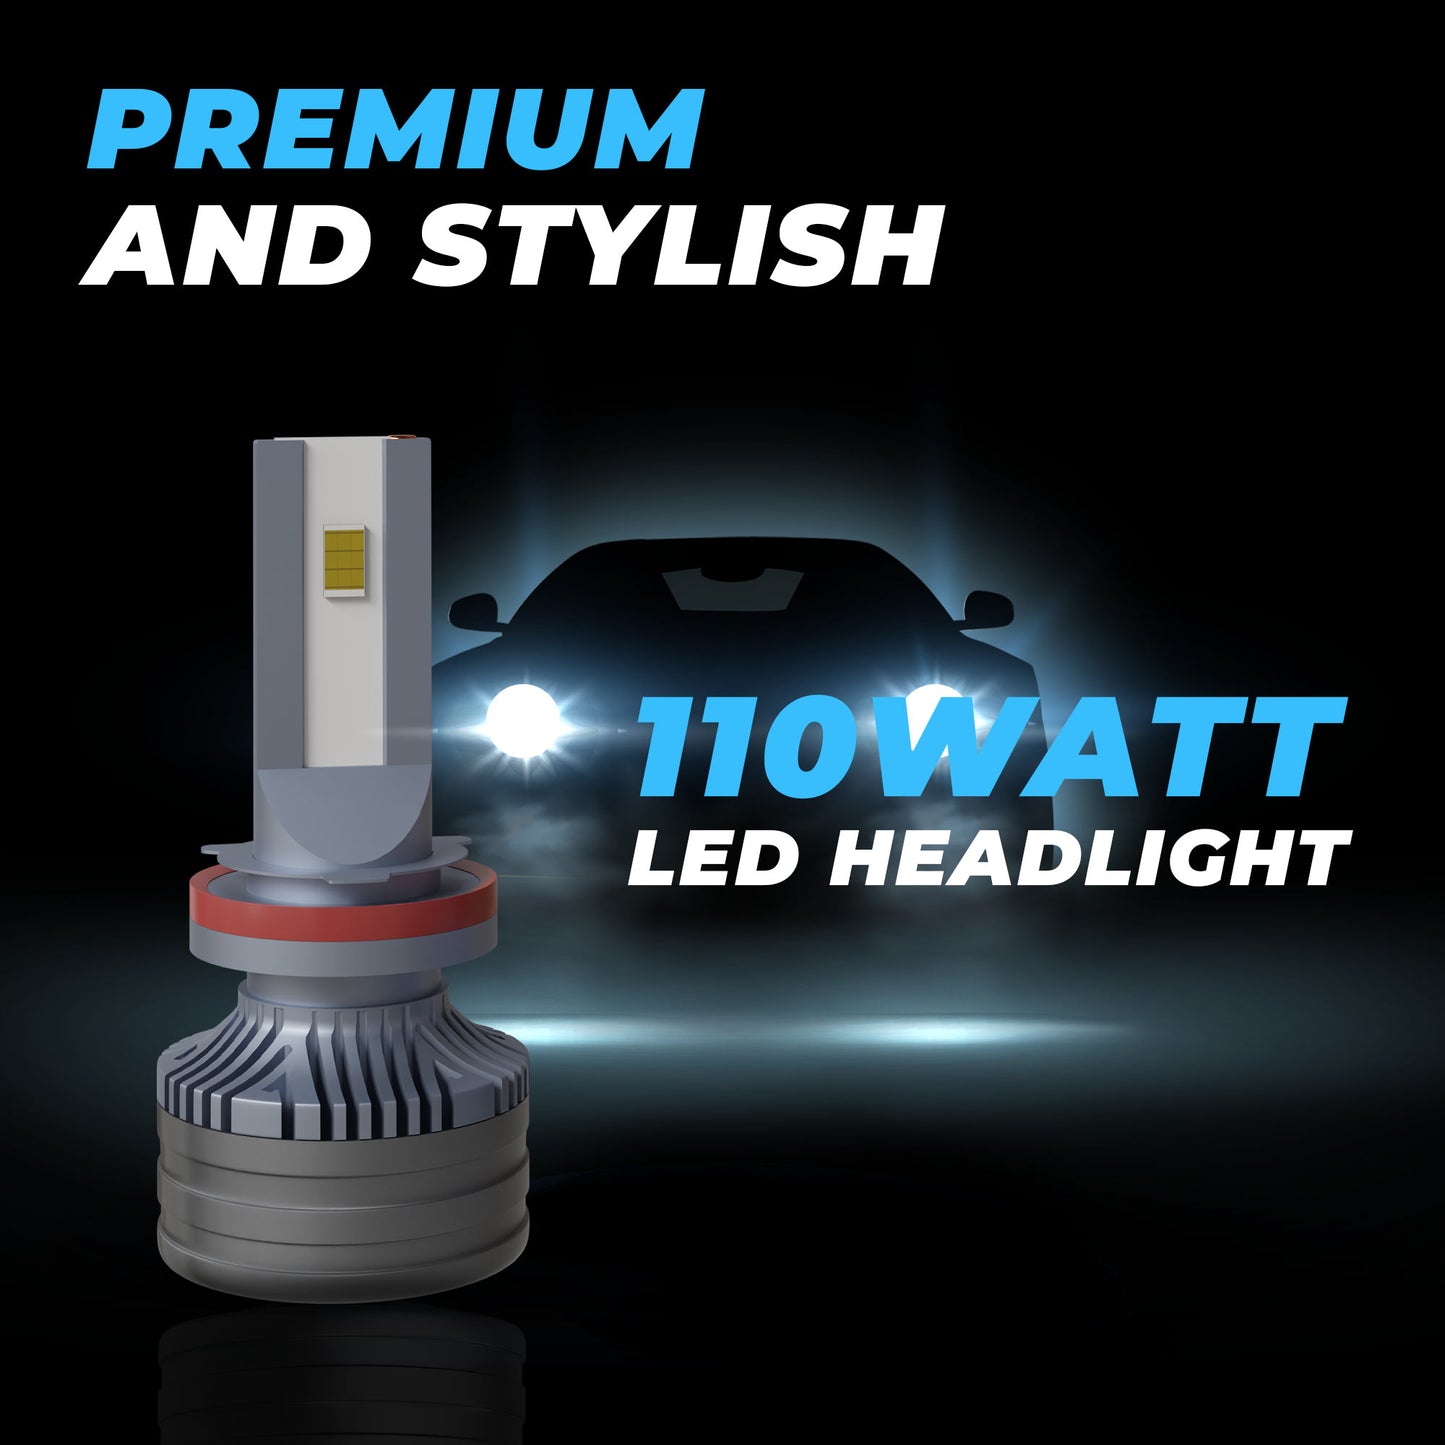 JCBL ACCESSORIES Lumenz H8/H11 110W Car Headlight LED Bulb, 8000 Lumens Dual-Beam, 6000-6500K Day Light, Weather-Resistant IP67 Waterproof | PREMIUM AND STYLISH | 110WATT LED HEADLIGHT